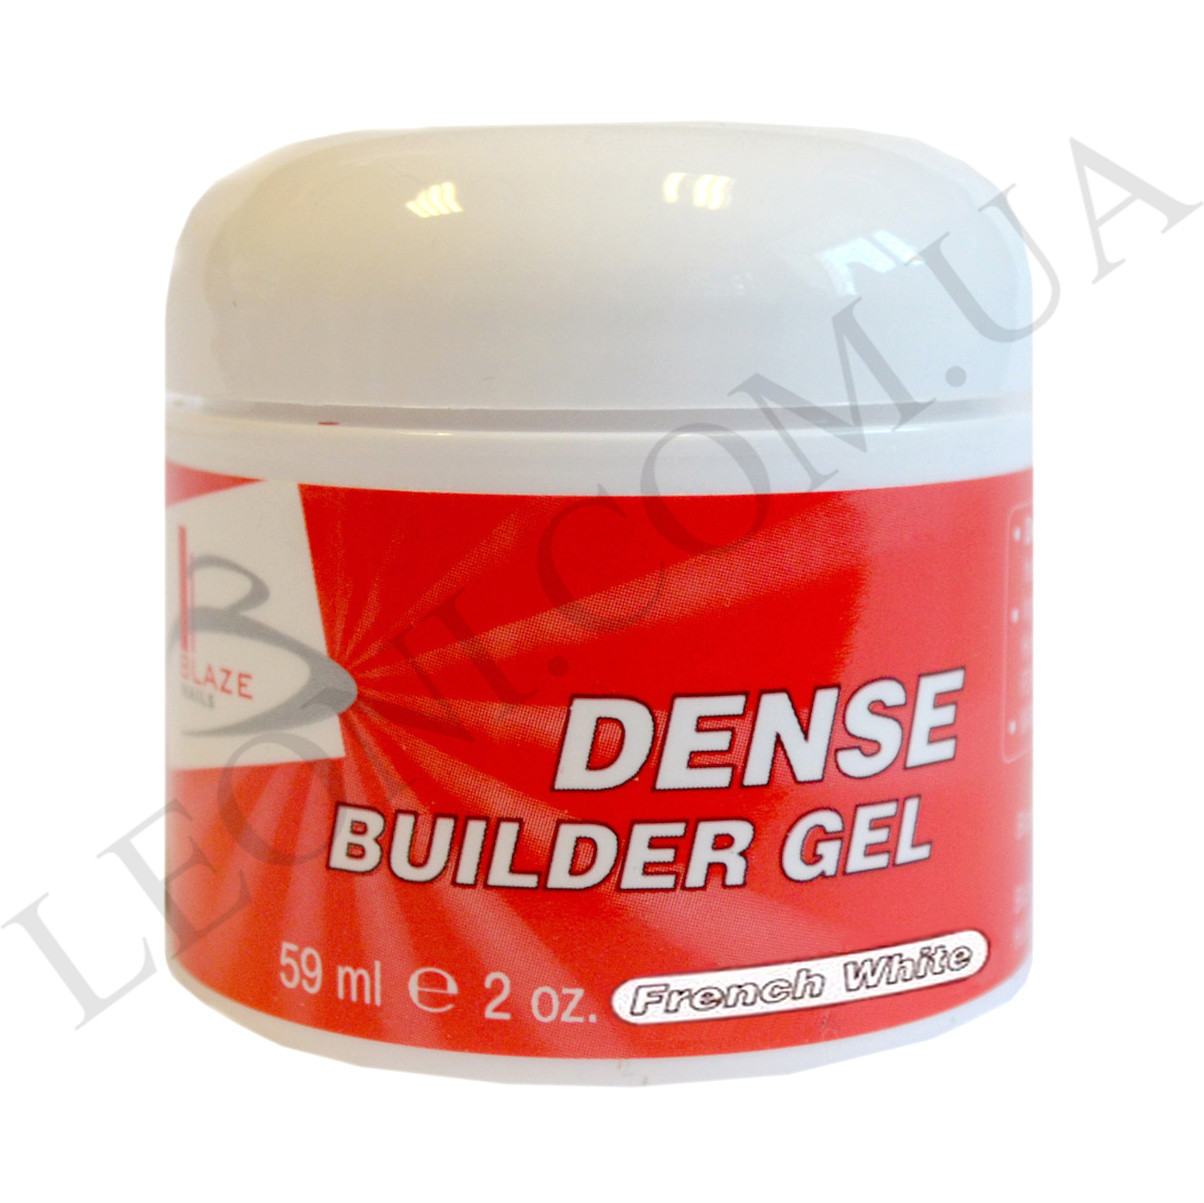 BLAZE Dense Builder Gel - УФ густой гель French White 59 мл